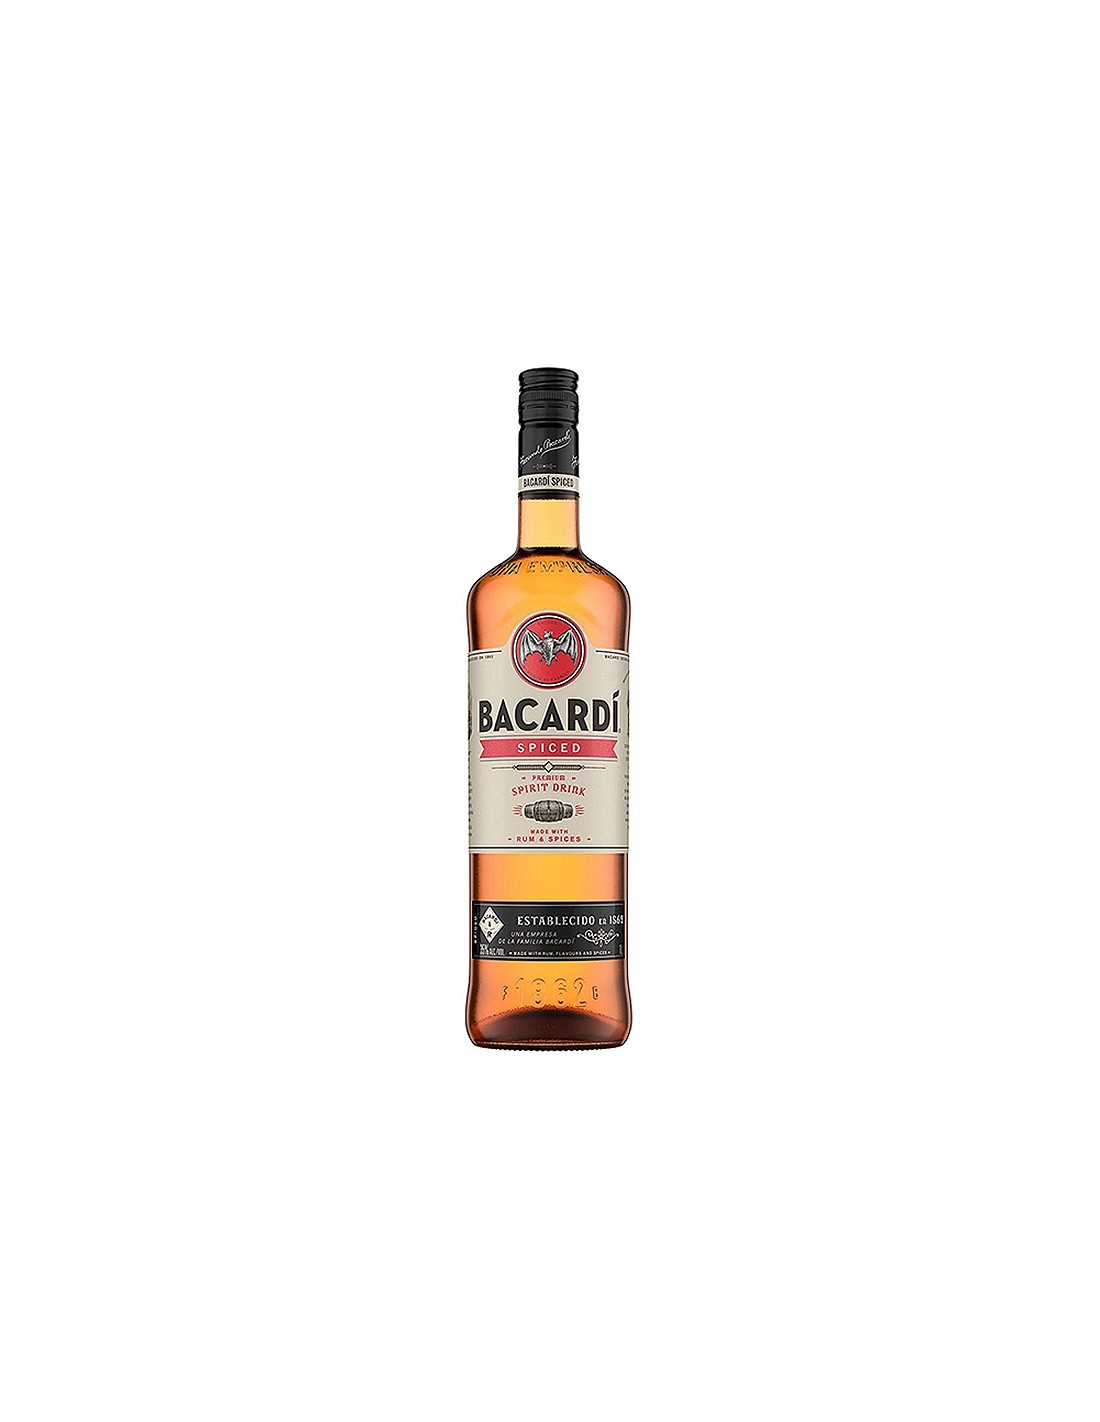 Rom Bacardi Spiced, 35% alc., 1L, Cuba alcooldiscount.ro